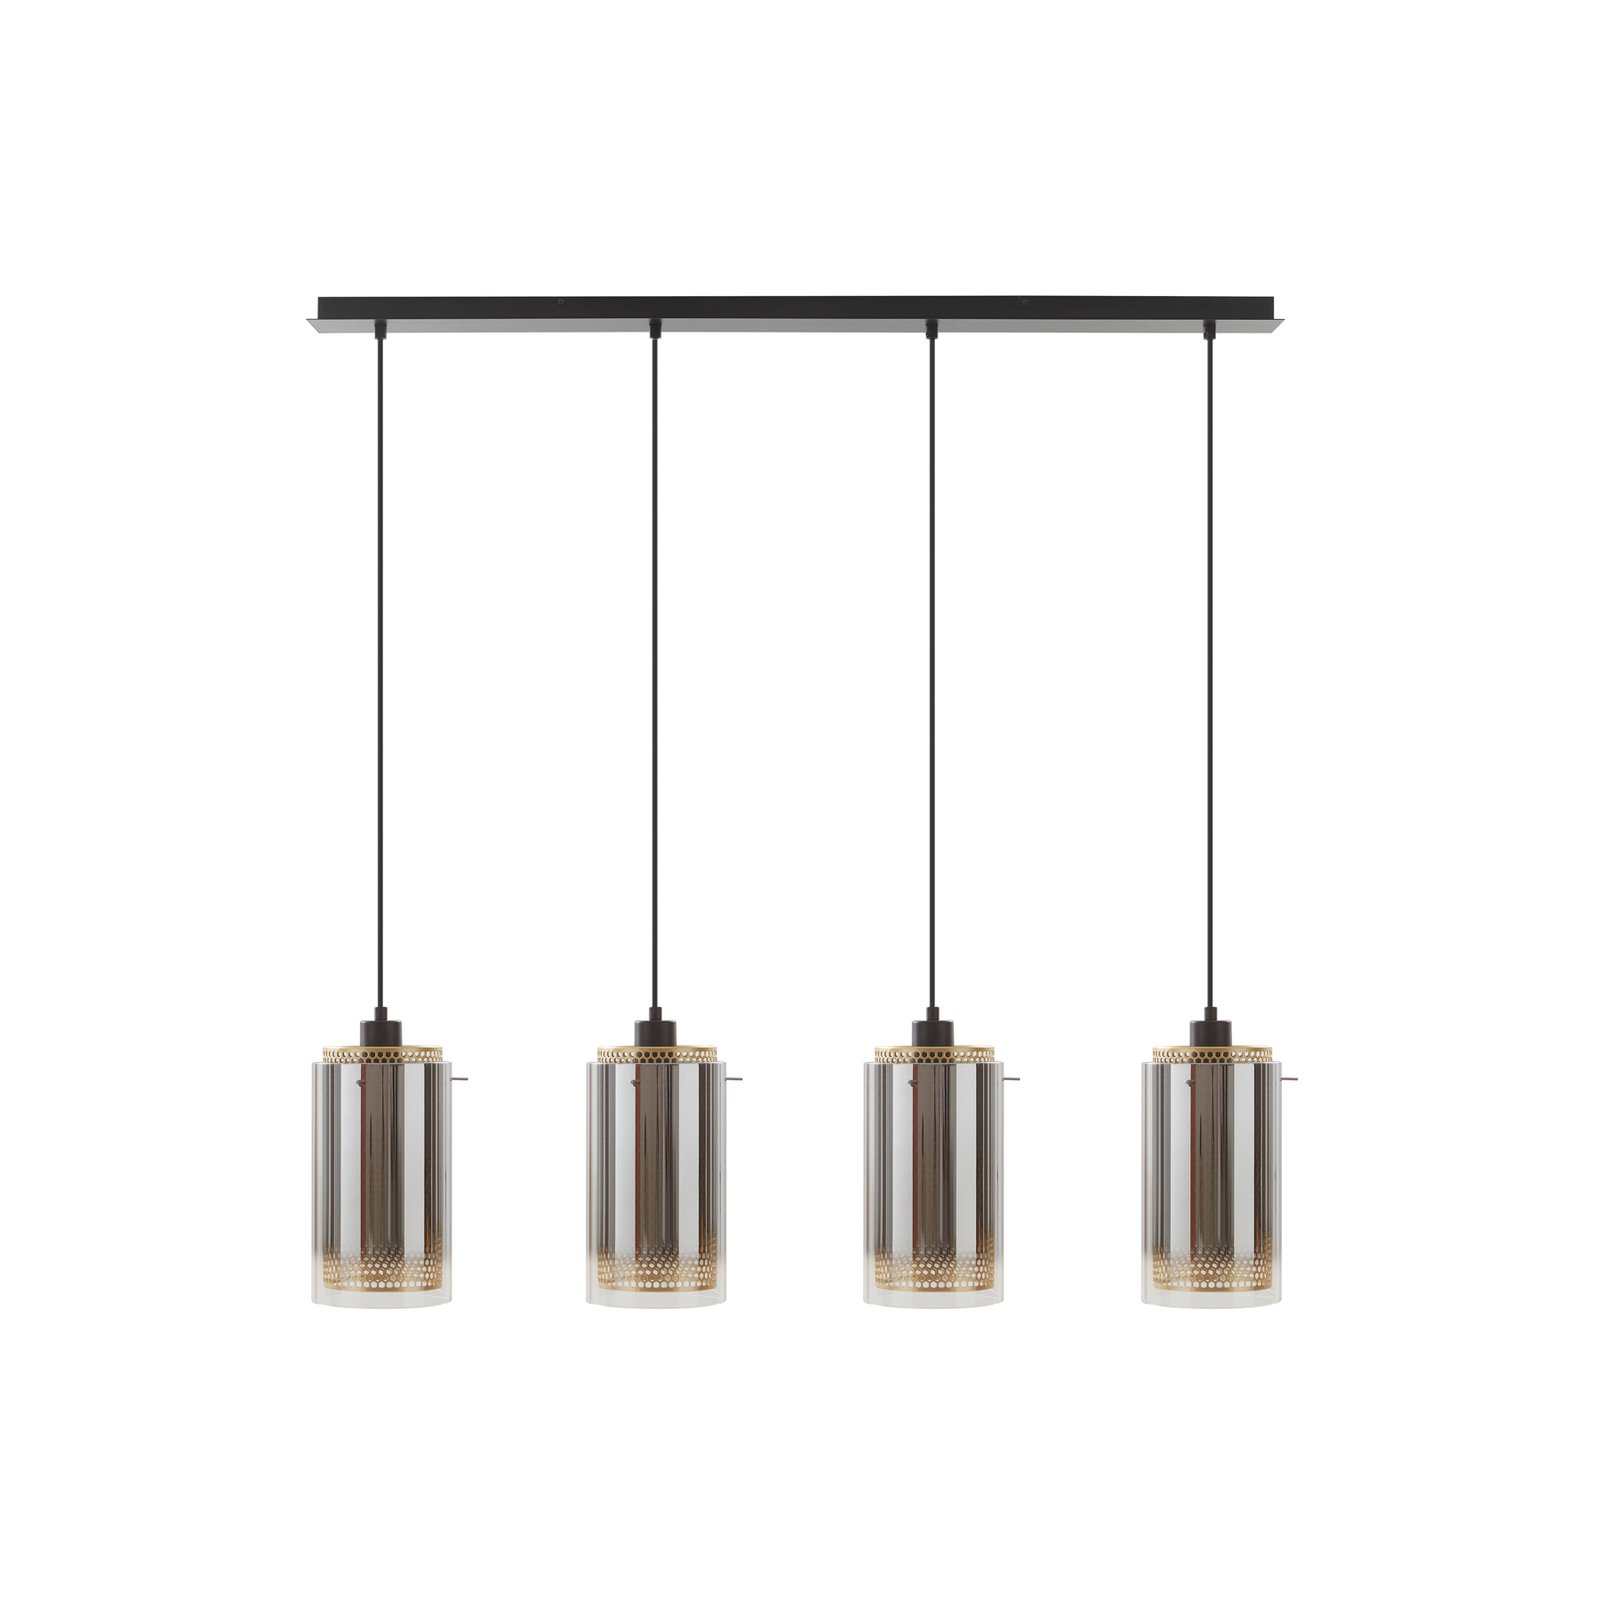 Lucande Sterzy pendant light, 105 cm long, grey, glass, 4-bulb.